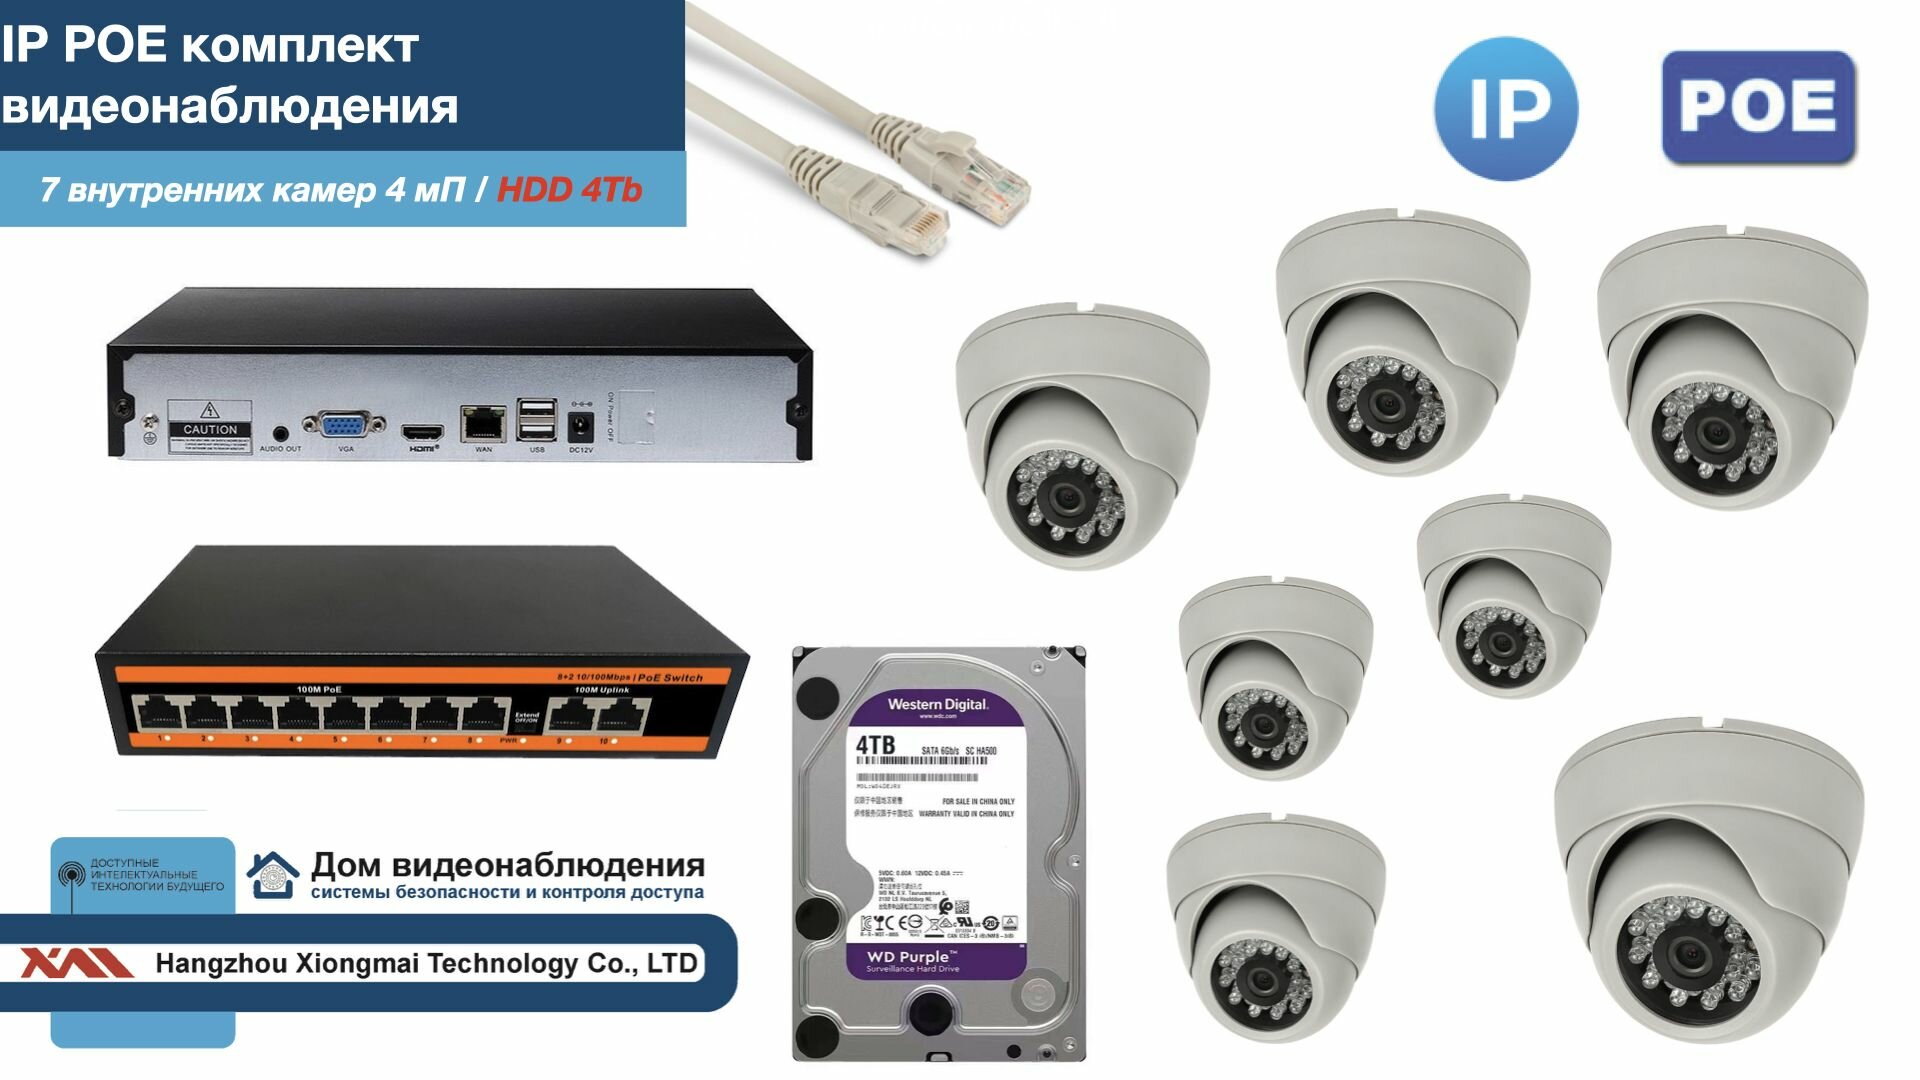 Полный IP POE комплект видеонаблюдения на 7 камер (KIT7IPPOE300W4MP-HDD4Tb)